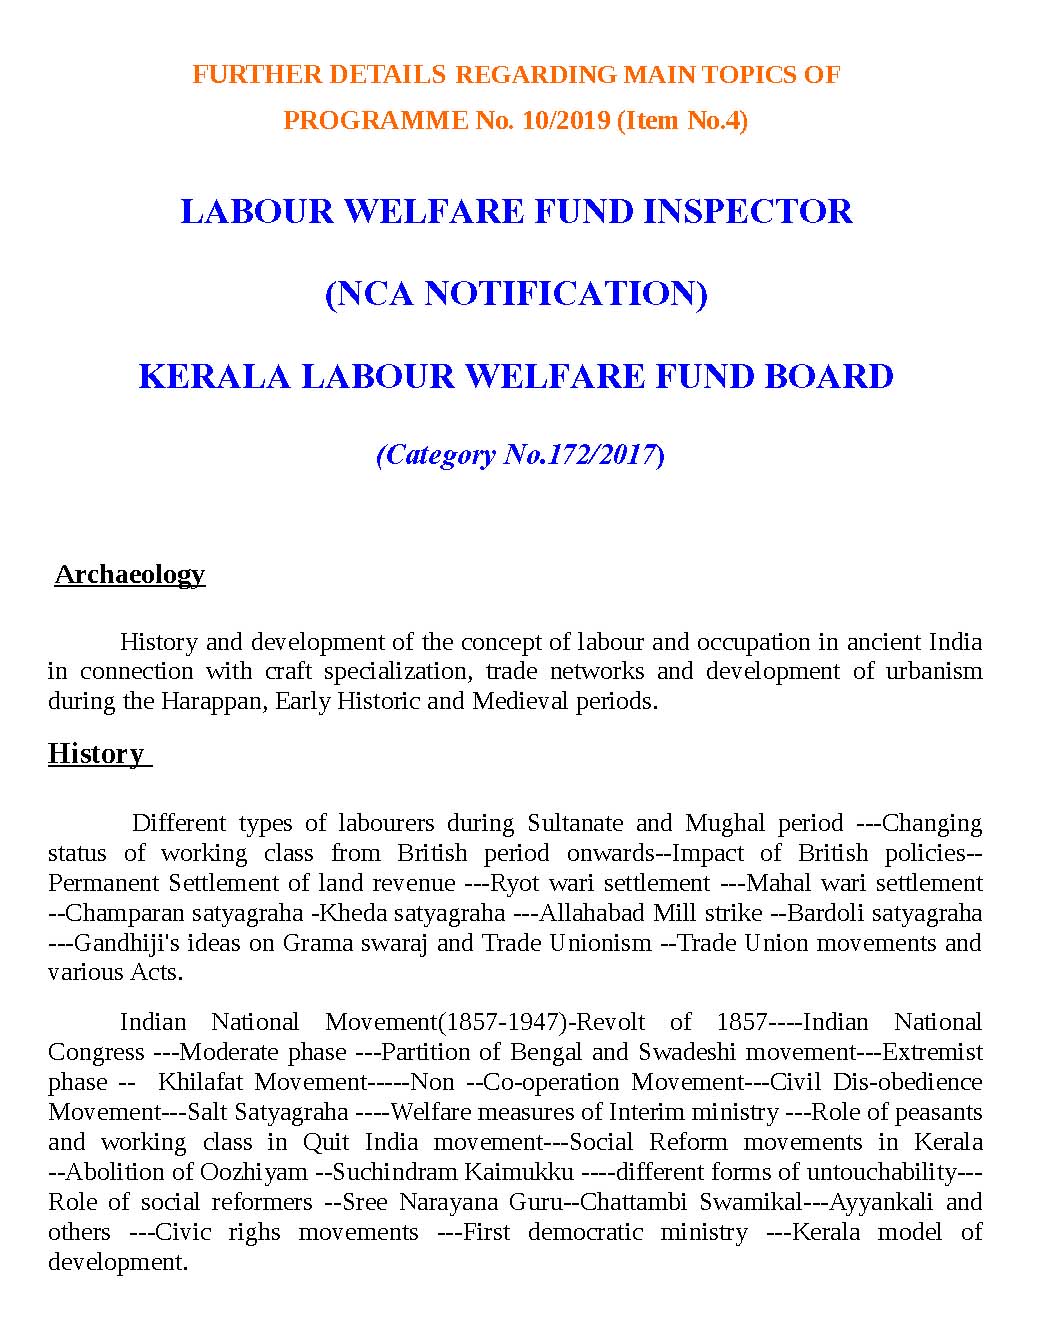 Kerala PSC Syllabus 2019 Labour Welfare Fund Inspector - Notification Image 1